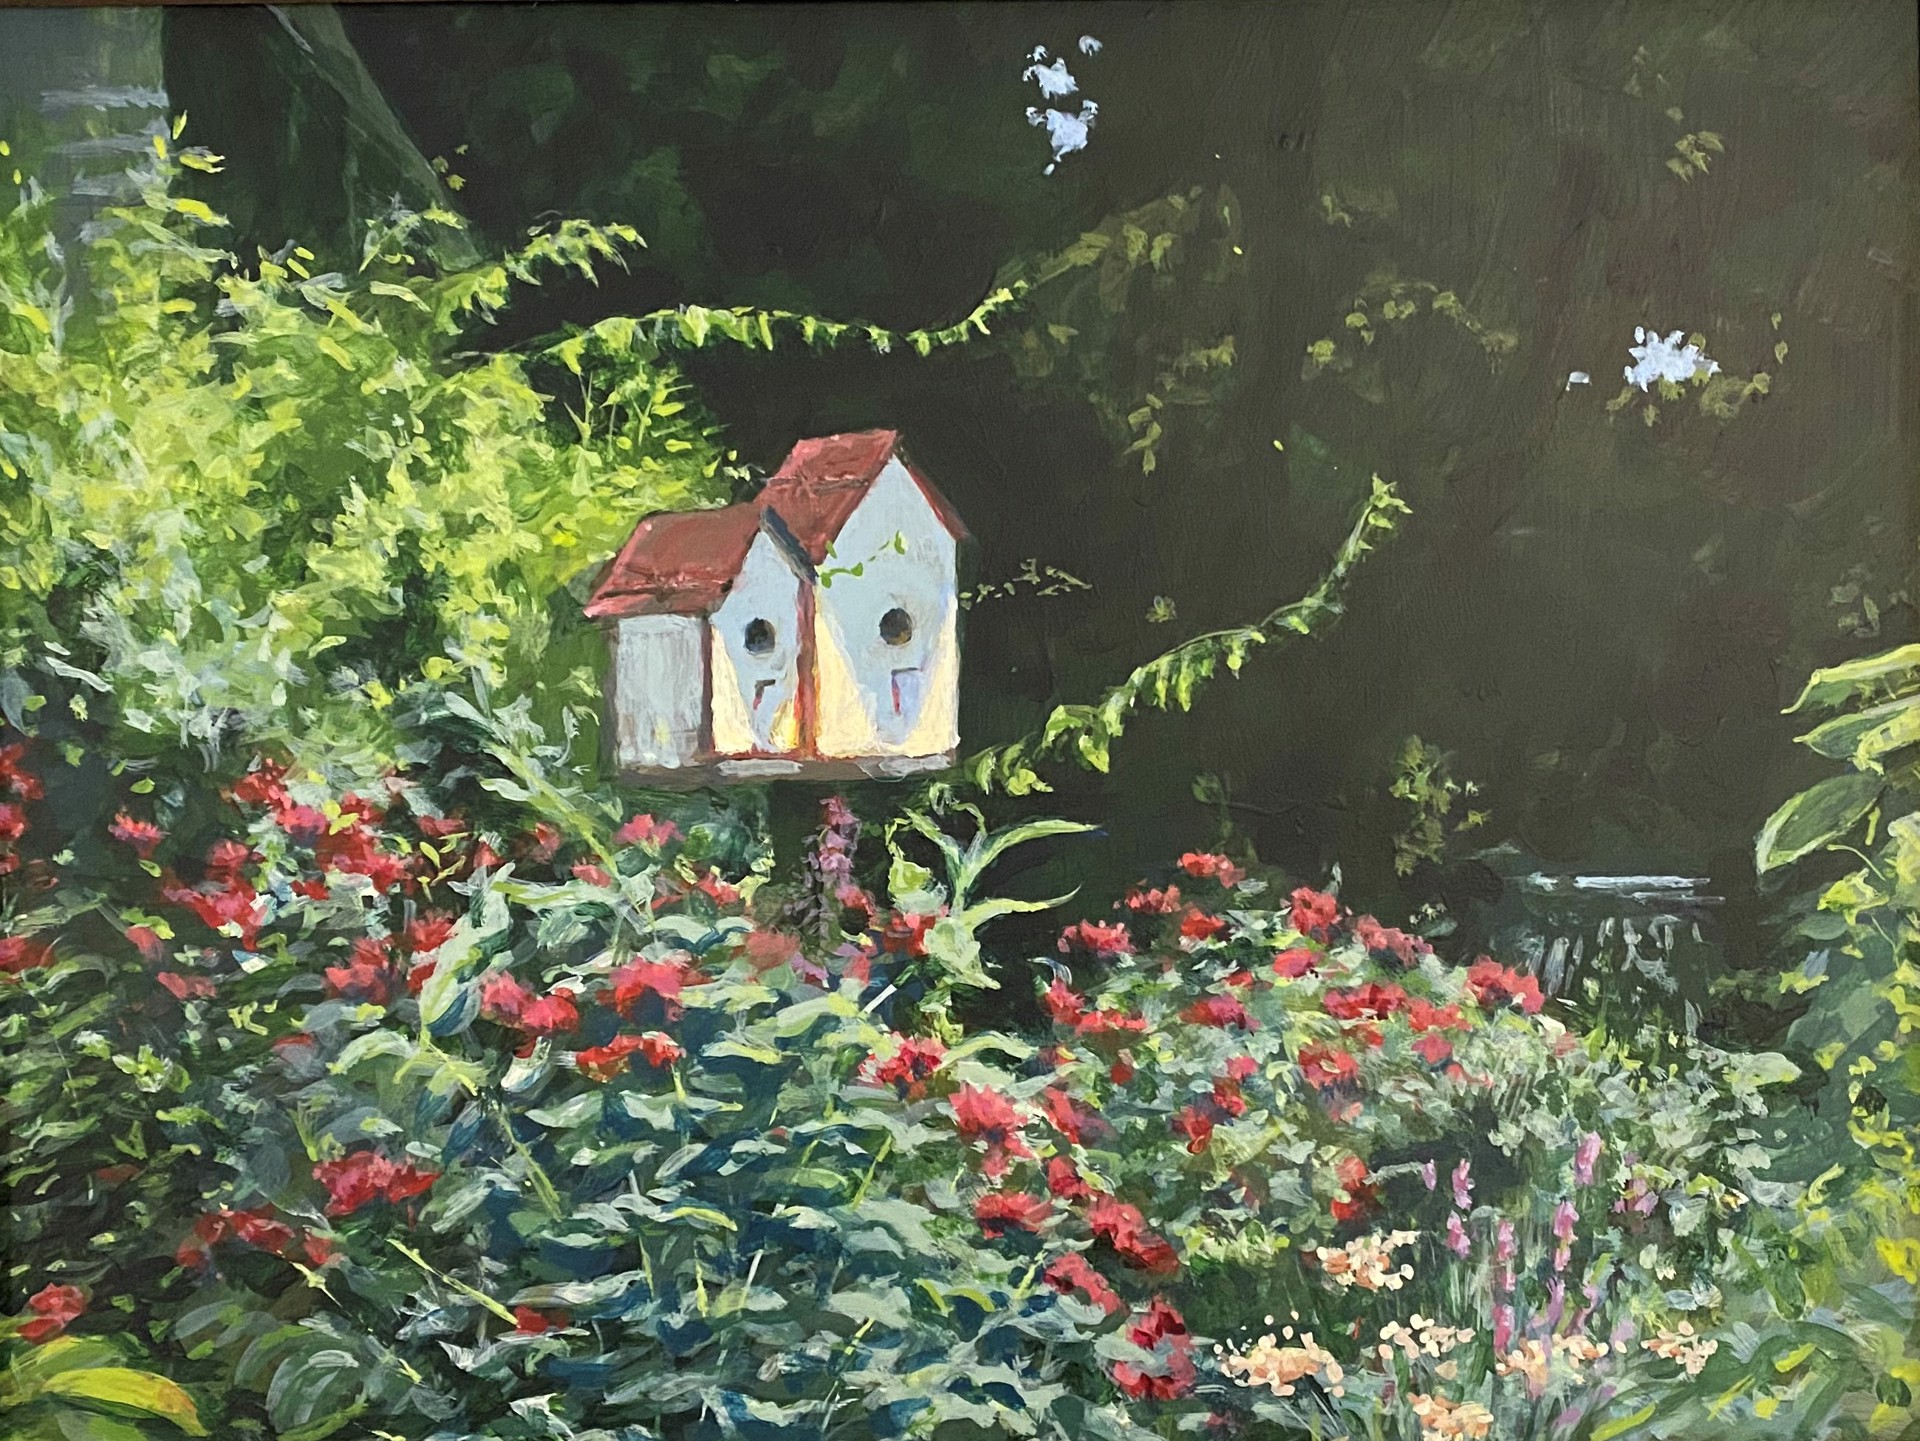 Bird House in Garden by Douglas H. Caves Sr.